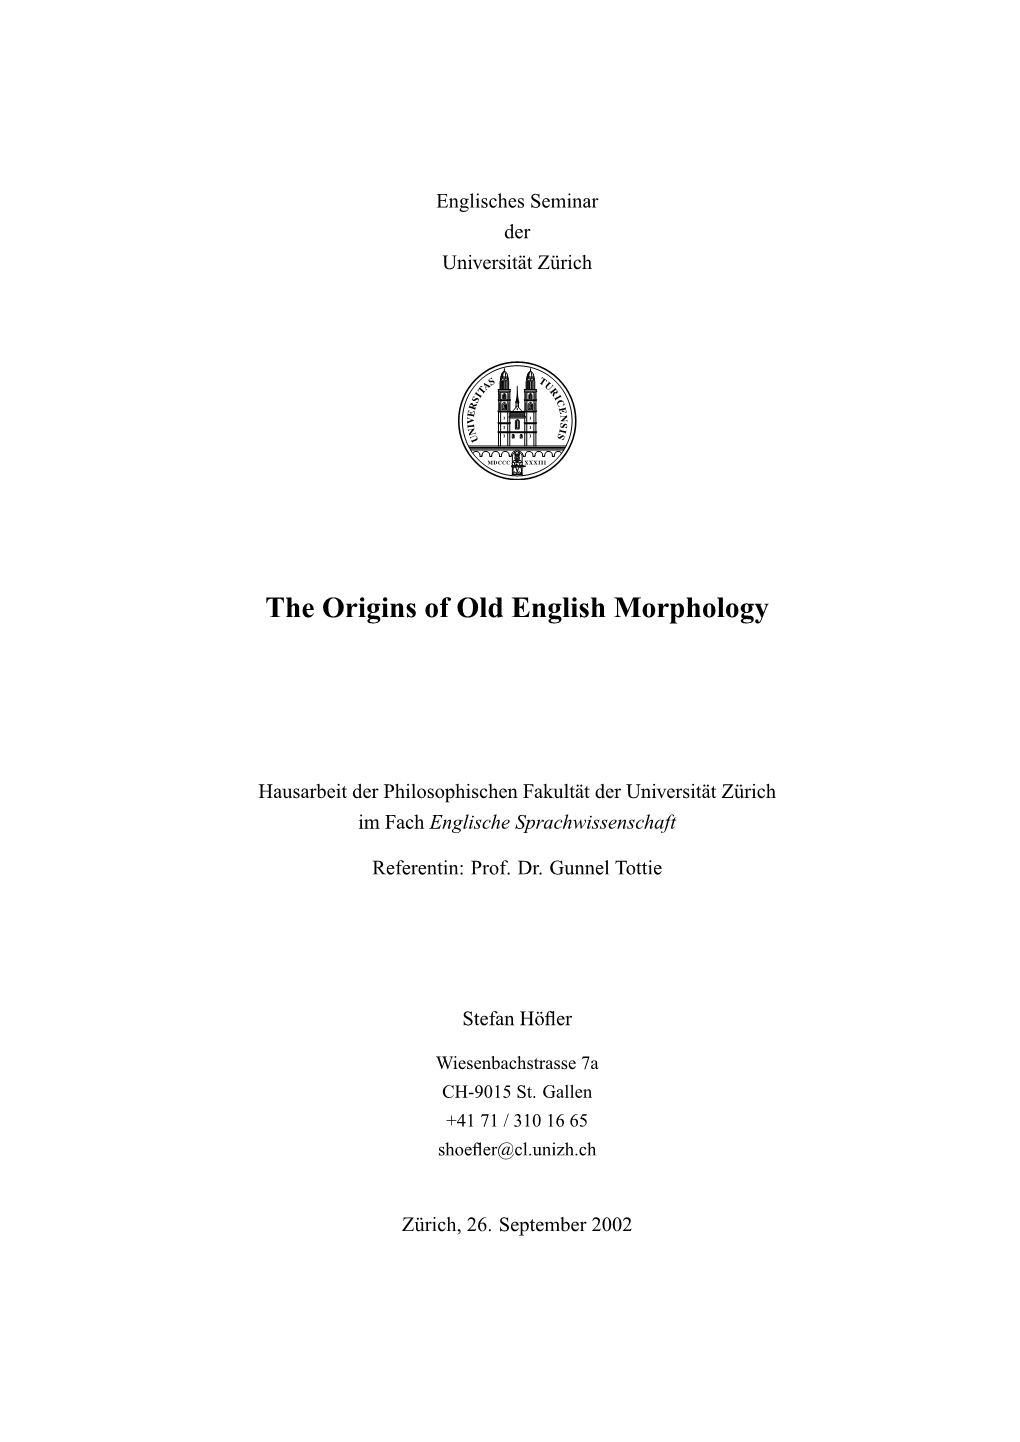 The Origins of Old English Morphology